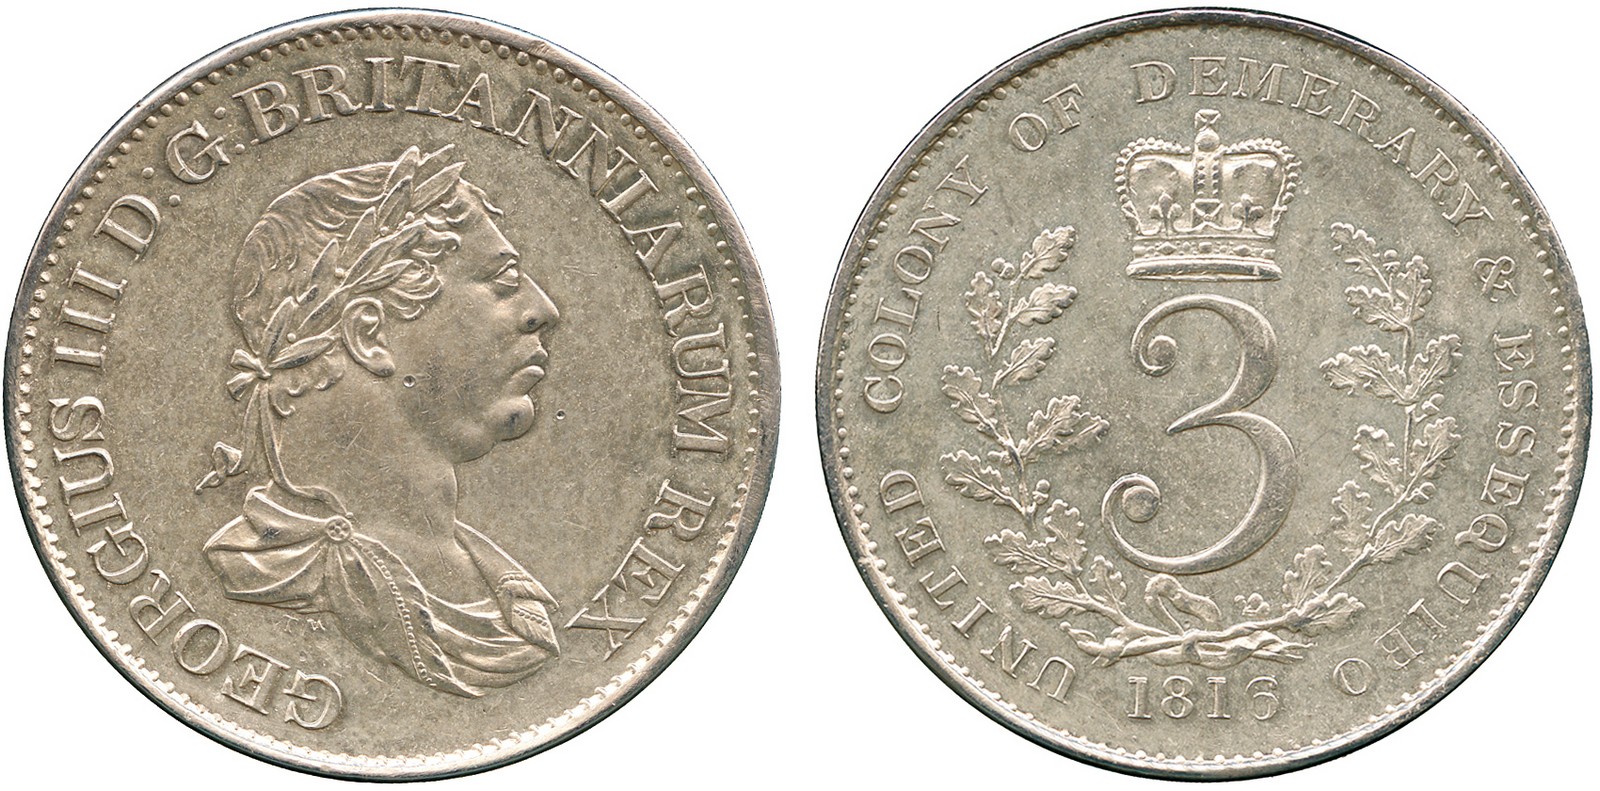 WORLD COINS, West Indies, British Guiana, Essequibo and Demerara, George III (1760-1820), Silver 3-